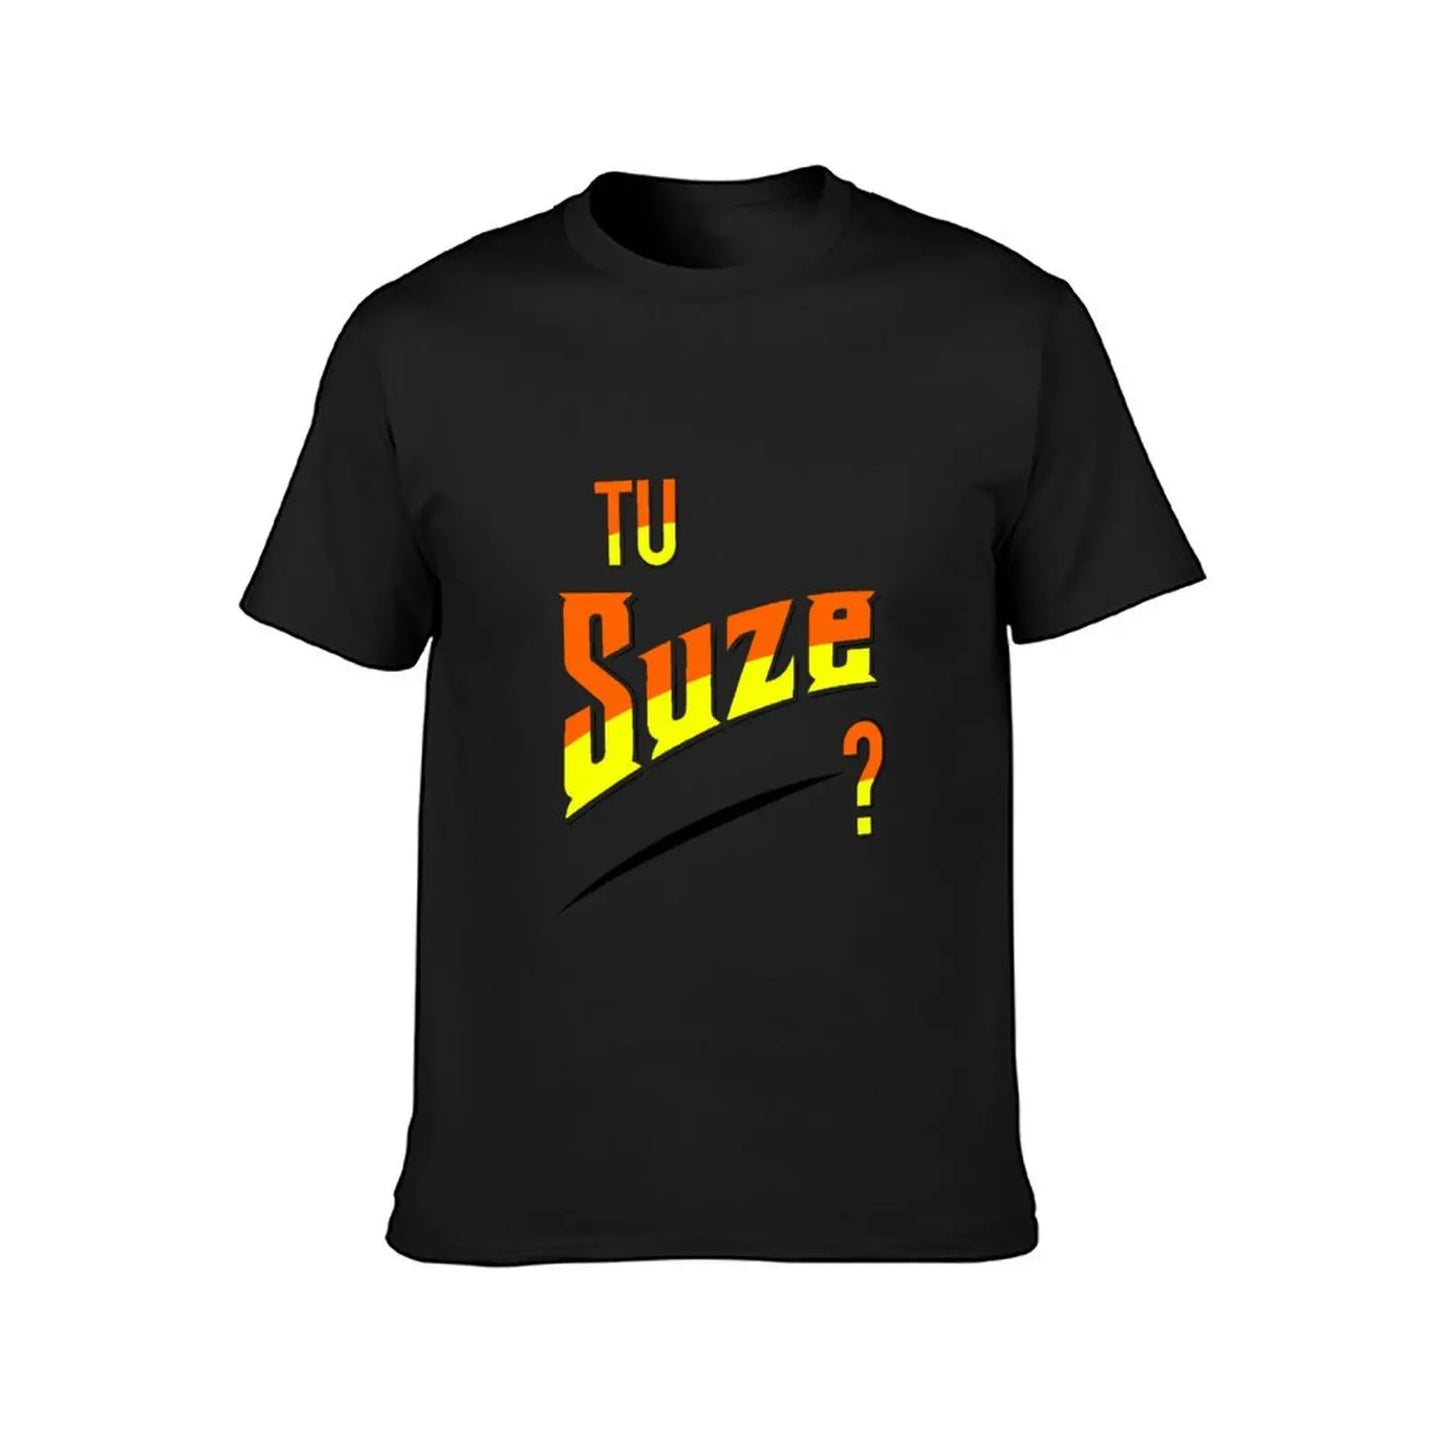 T-shirt " Tu Suze ? "